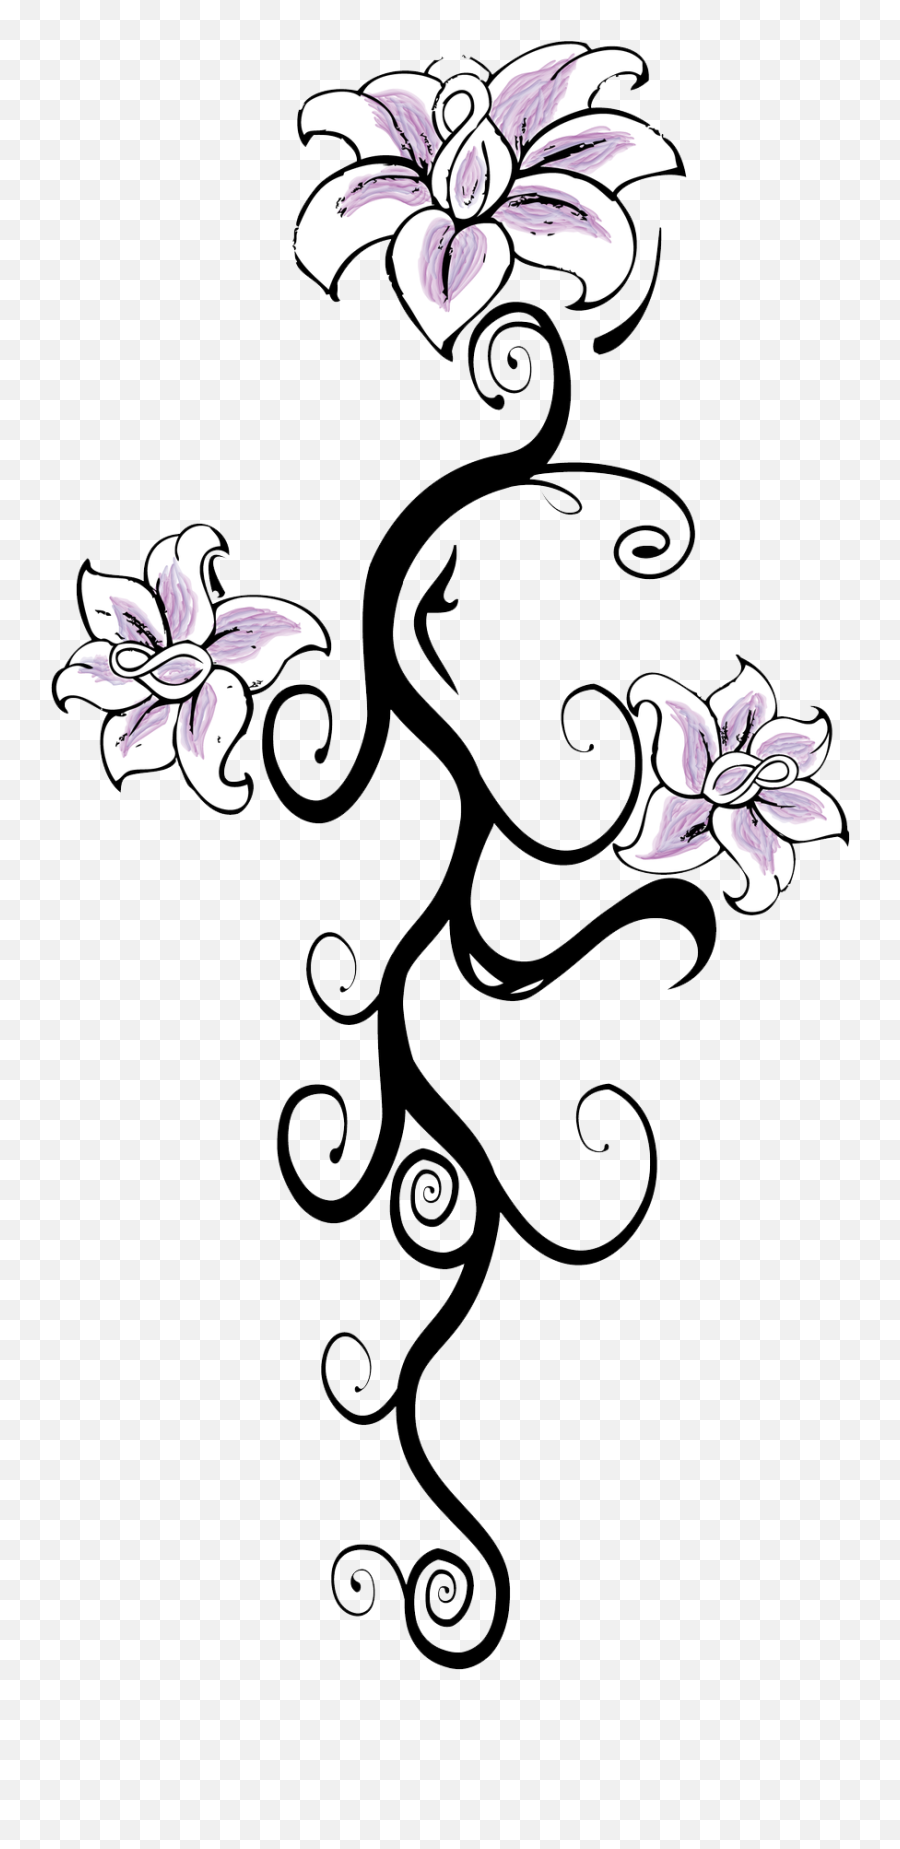 Flower Tattoo Png Transparent Images - Flower Tattoo Design Png,Flower Tattoo Png